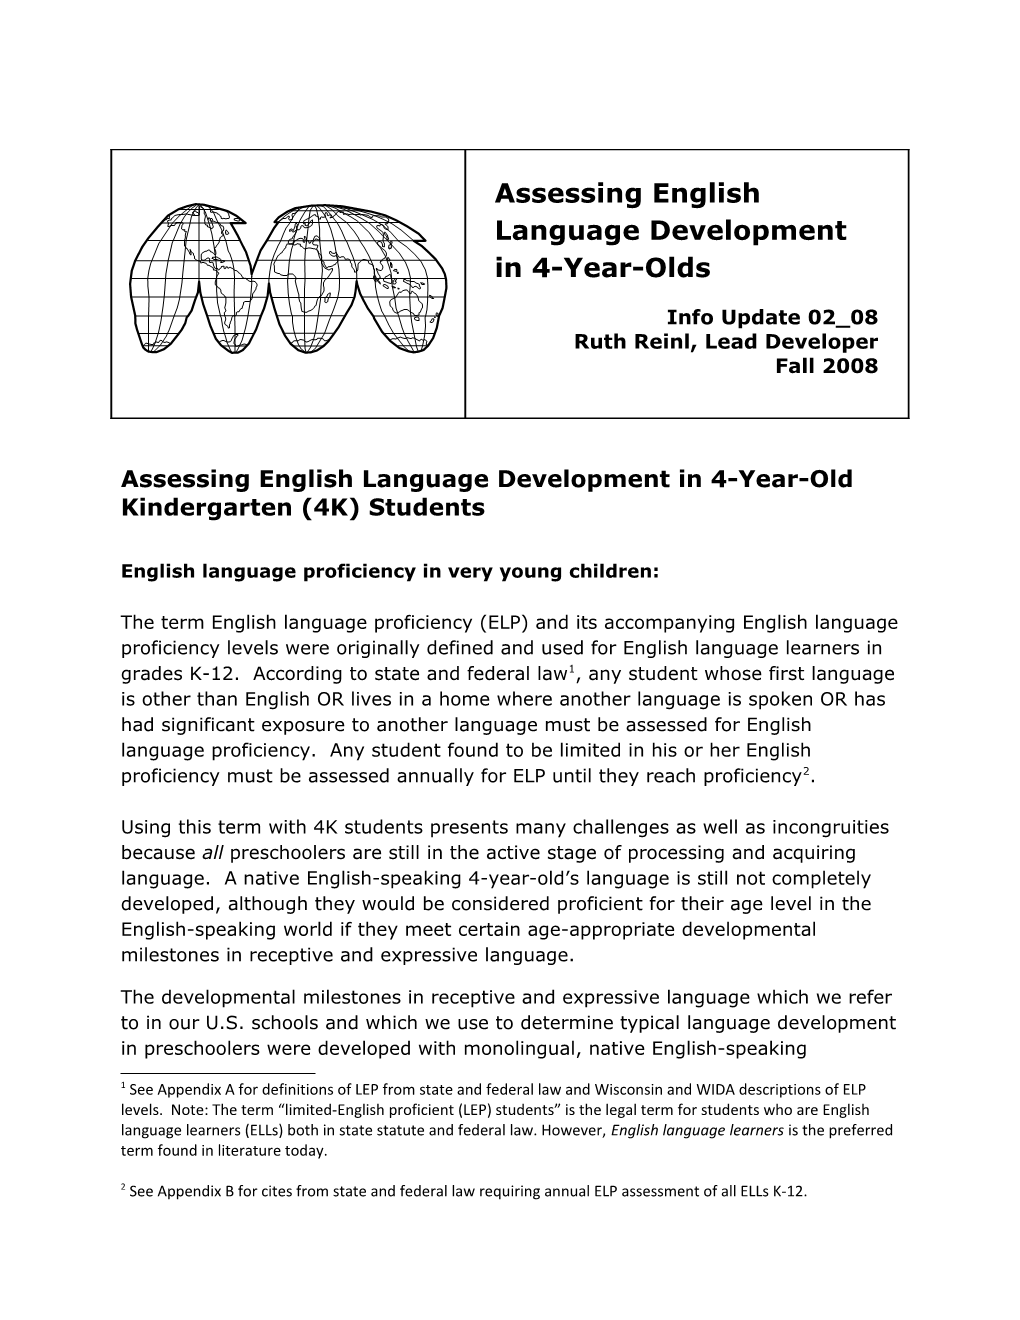 Assessing English Language Development in 4-Year-Old Kindergarten (4K) Students